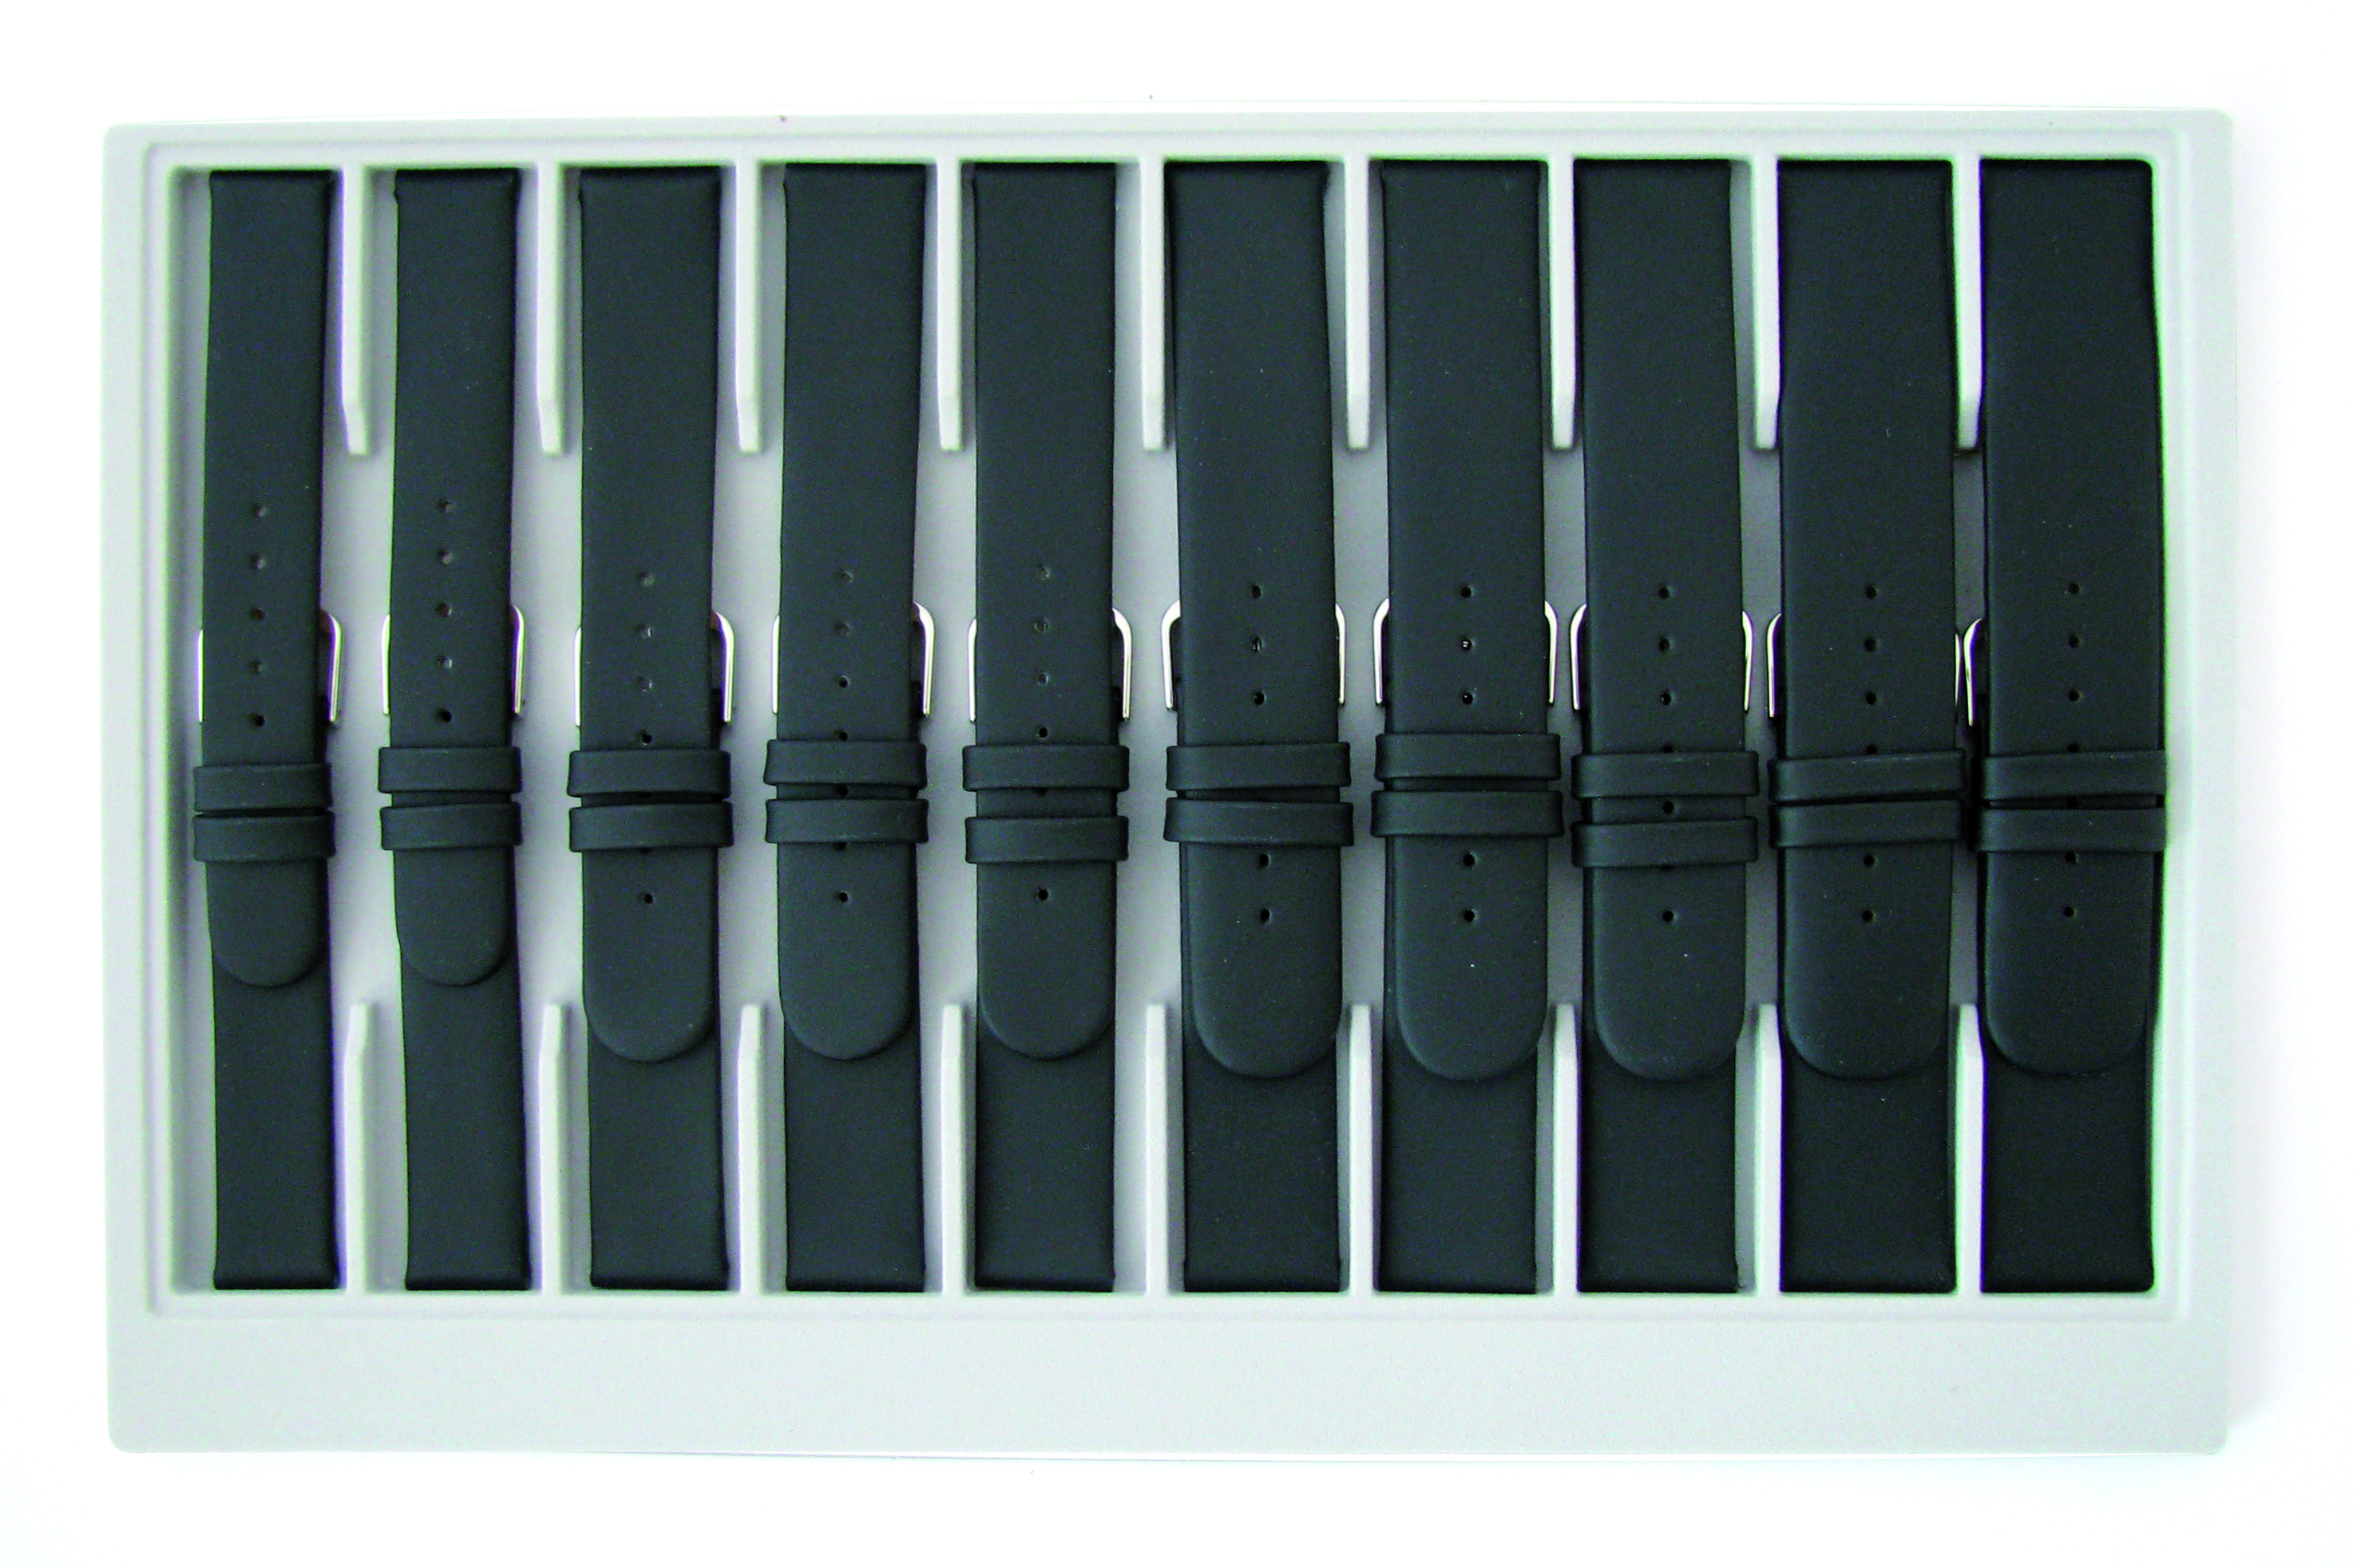 Paski skórzane zestaw 10 sztuk Kalb wodoodporny 16-22mm czarny